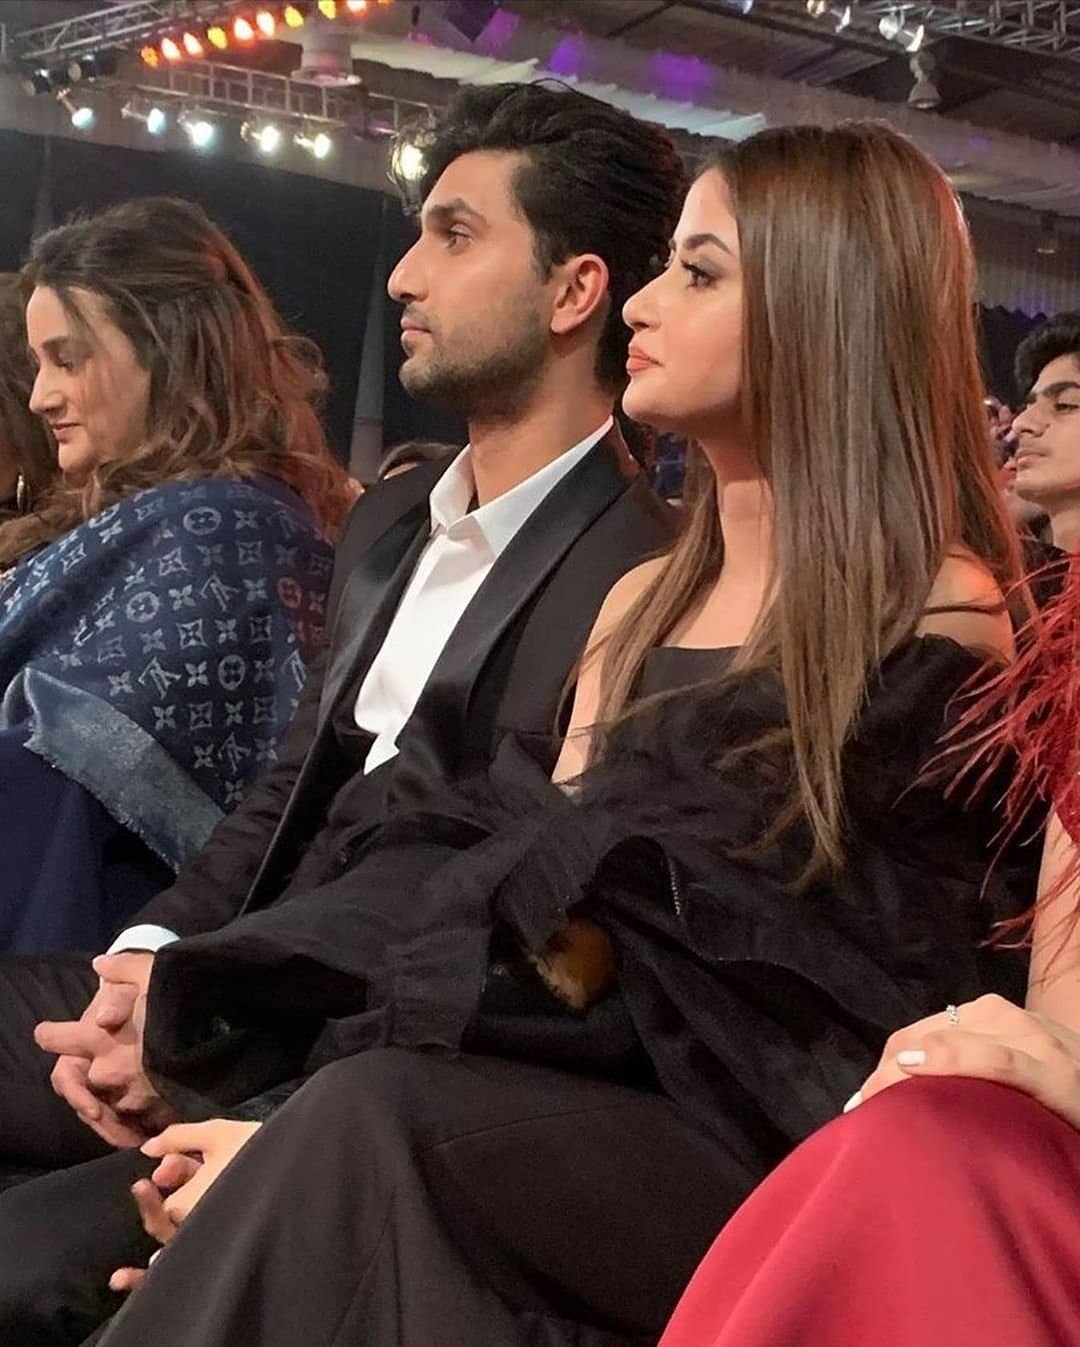 Beautiful Couple Ahad Raza Mir and Sajal Aly at Hum Style Awards 2020